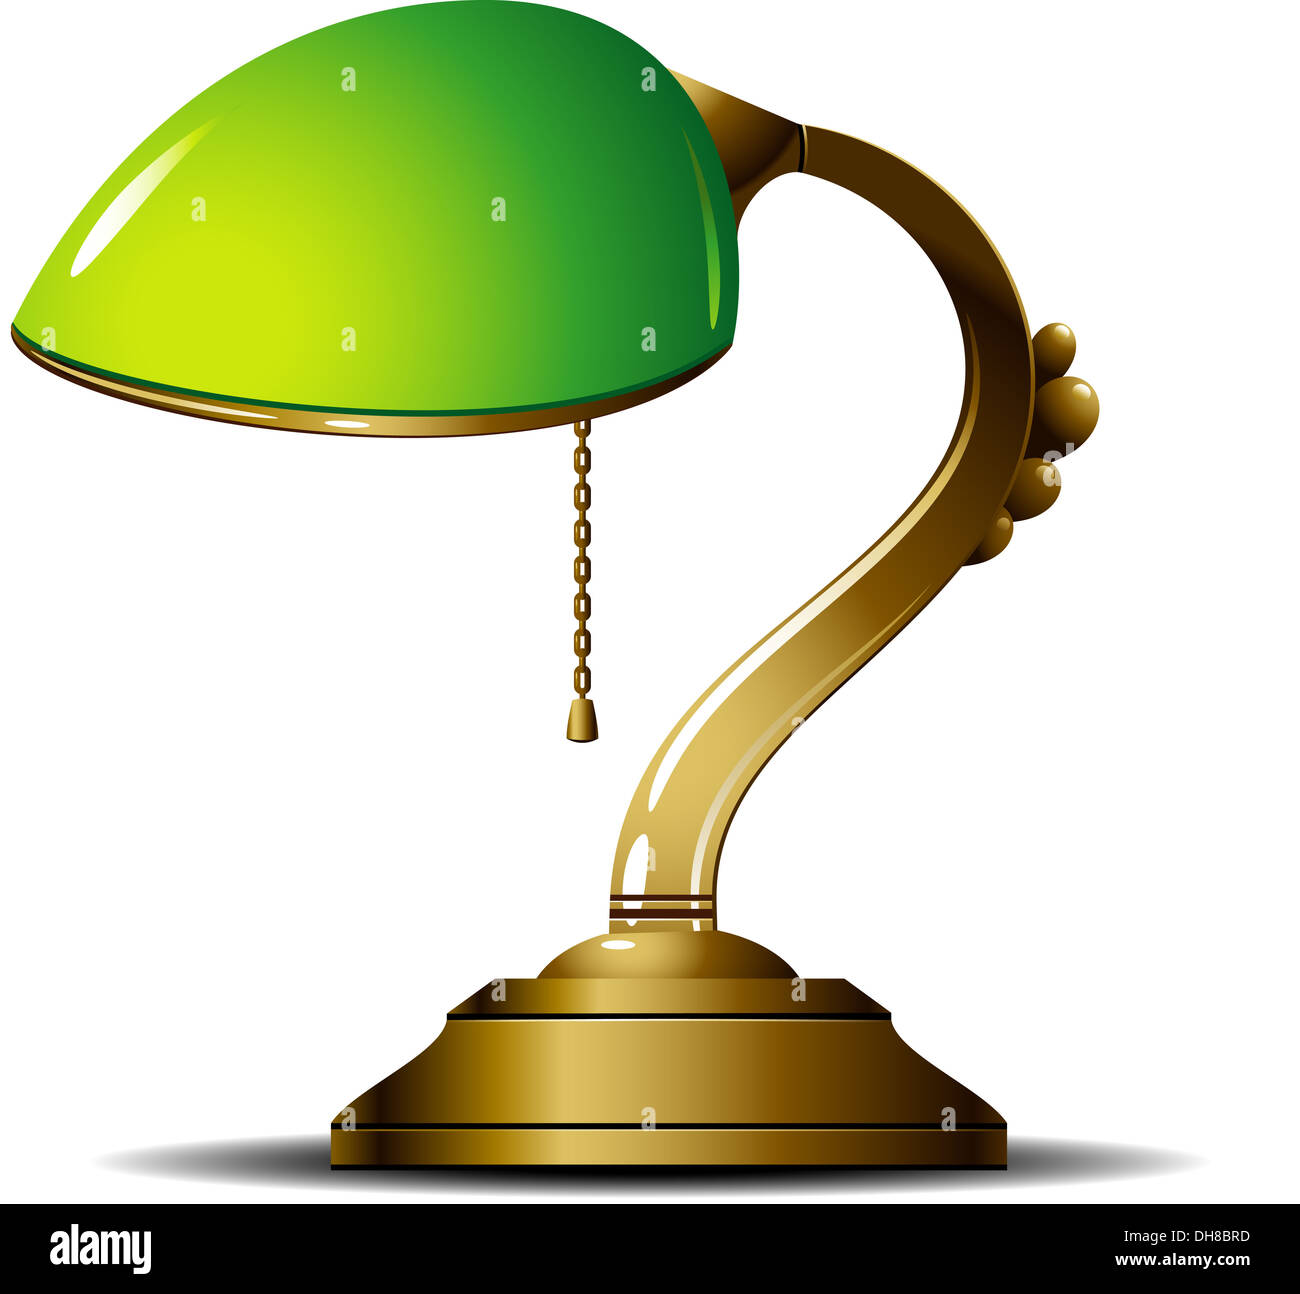 Green Desk Lamp Vector Illustration Stock Photo 62265153 Alamy